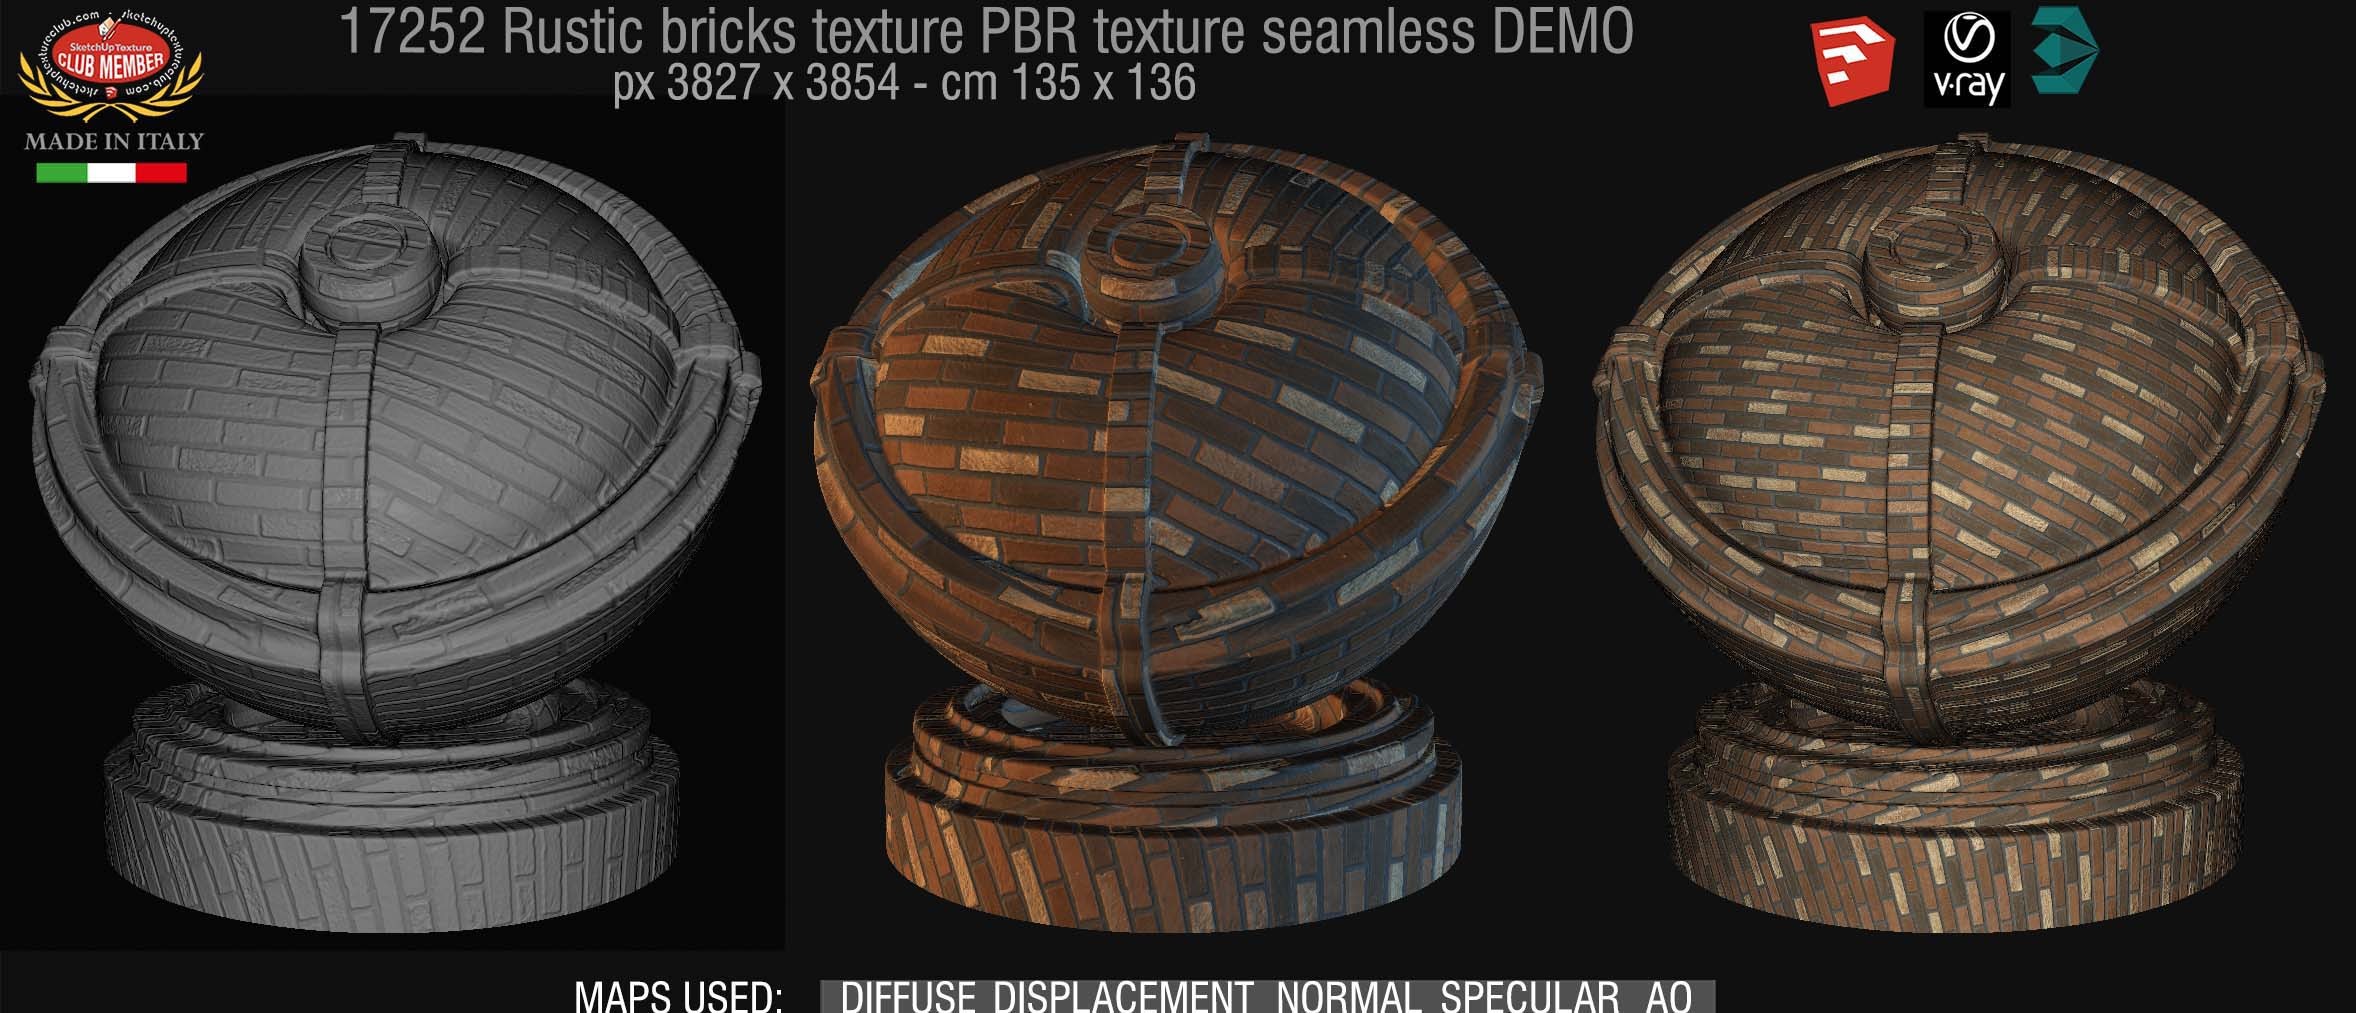 17252 Rustic bricks PBR texture seamless DEMO